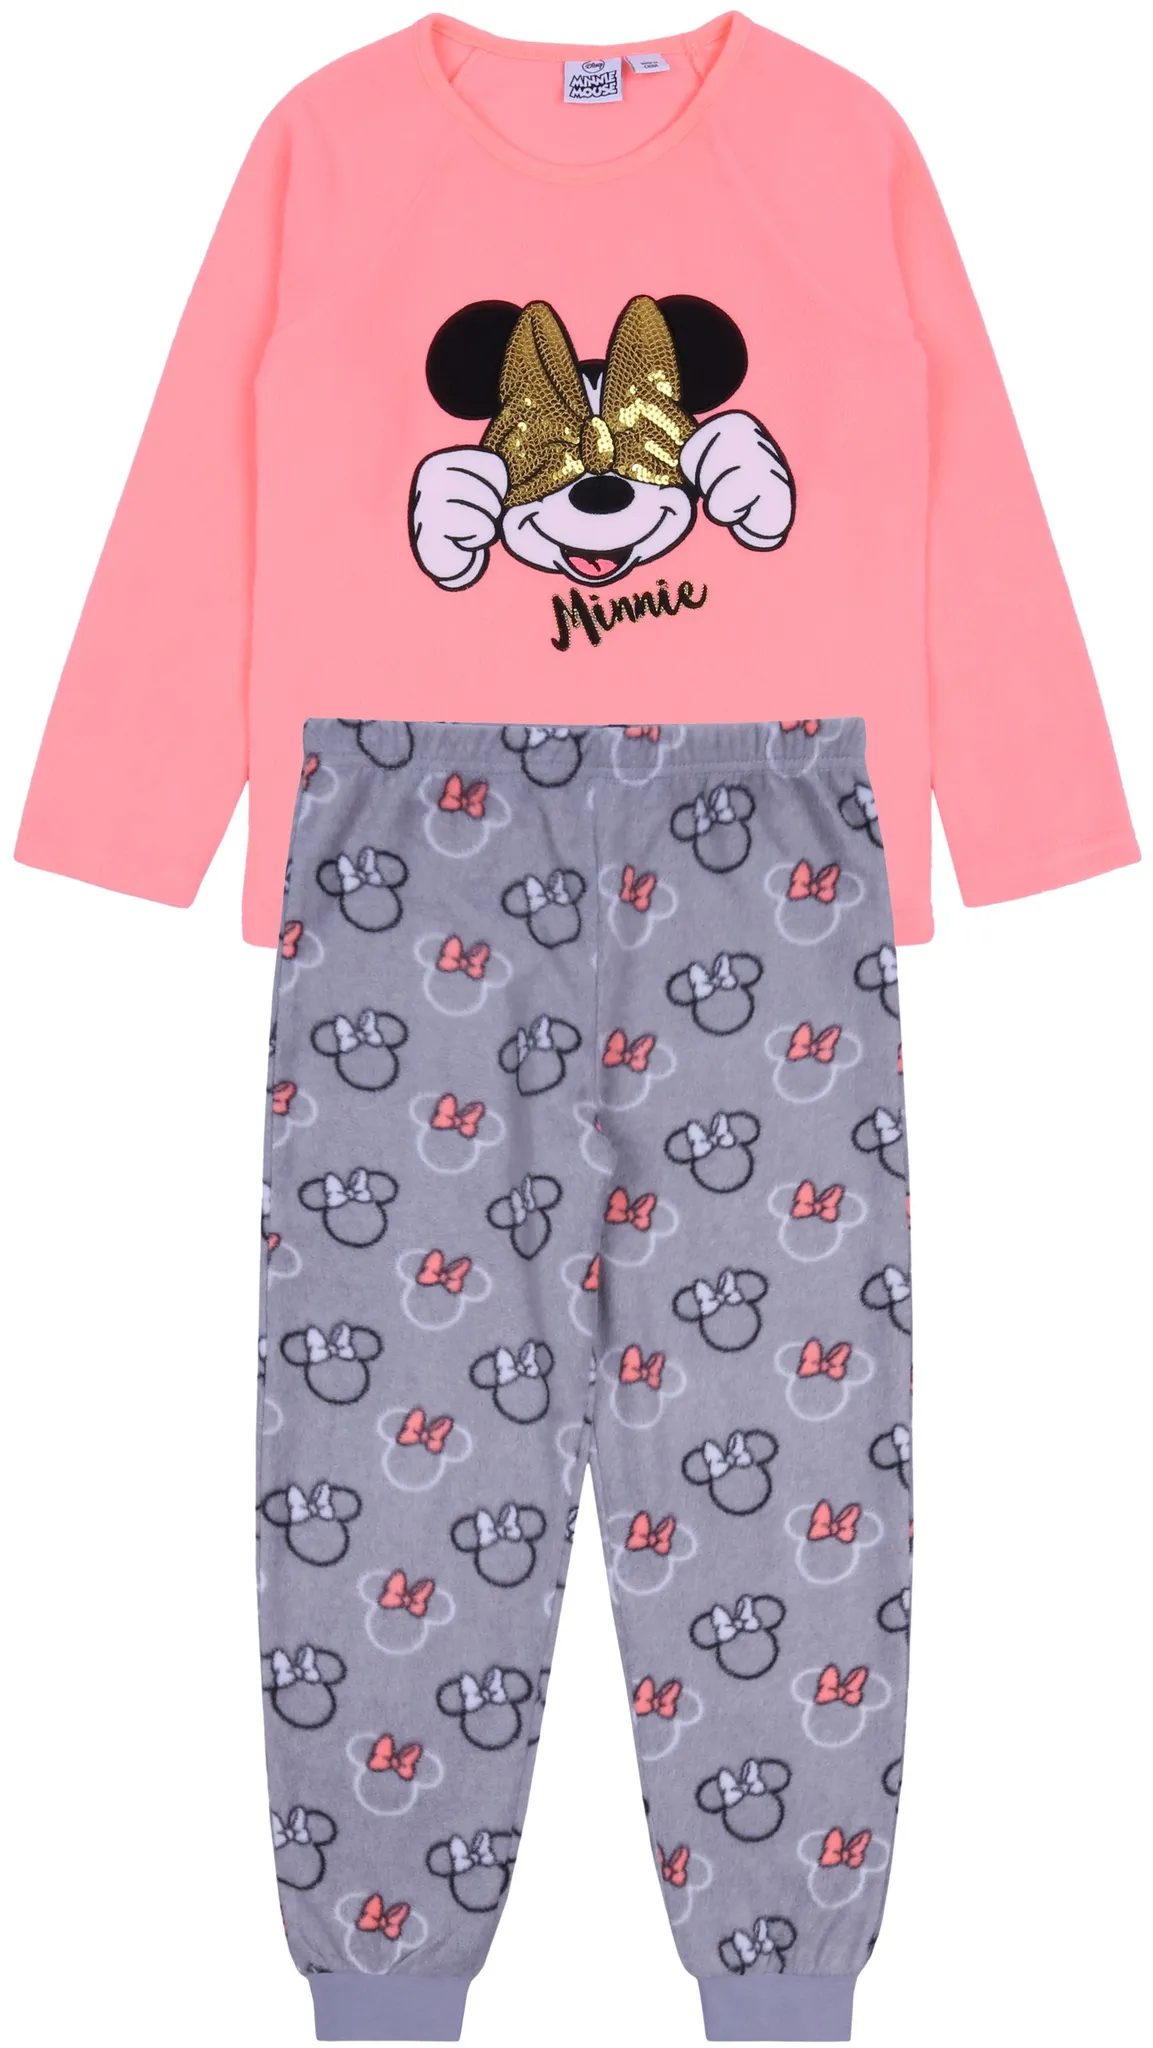 Pyjama Minnie Mouse mit neonfarbenem Oberteil